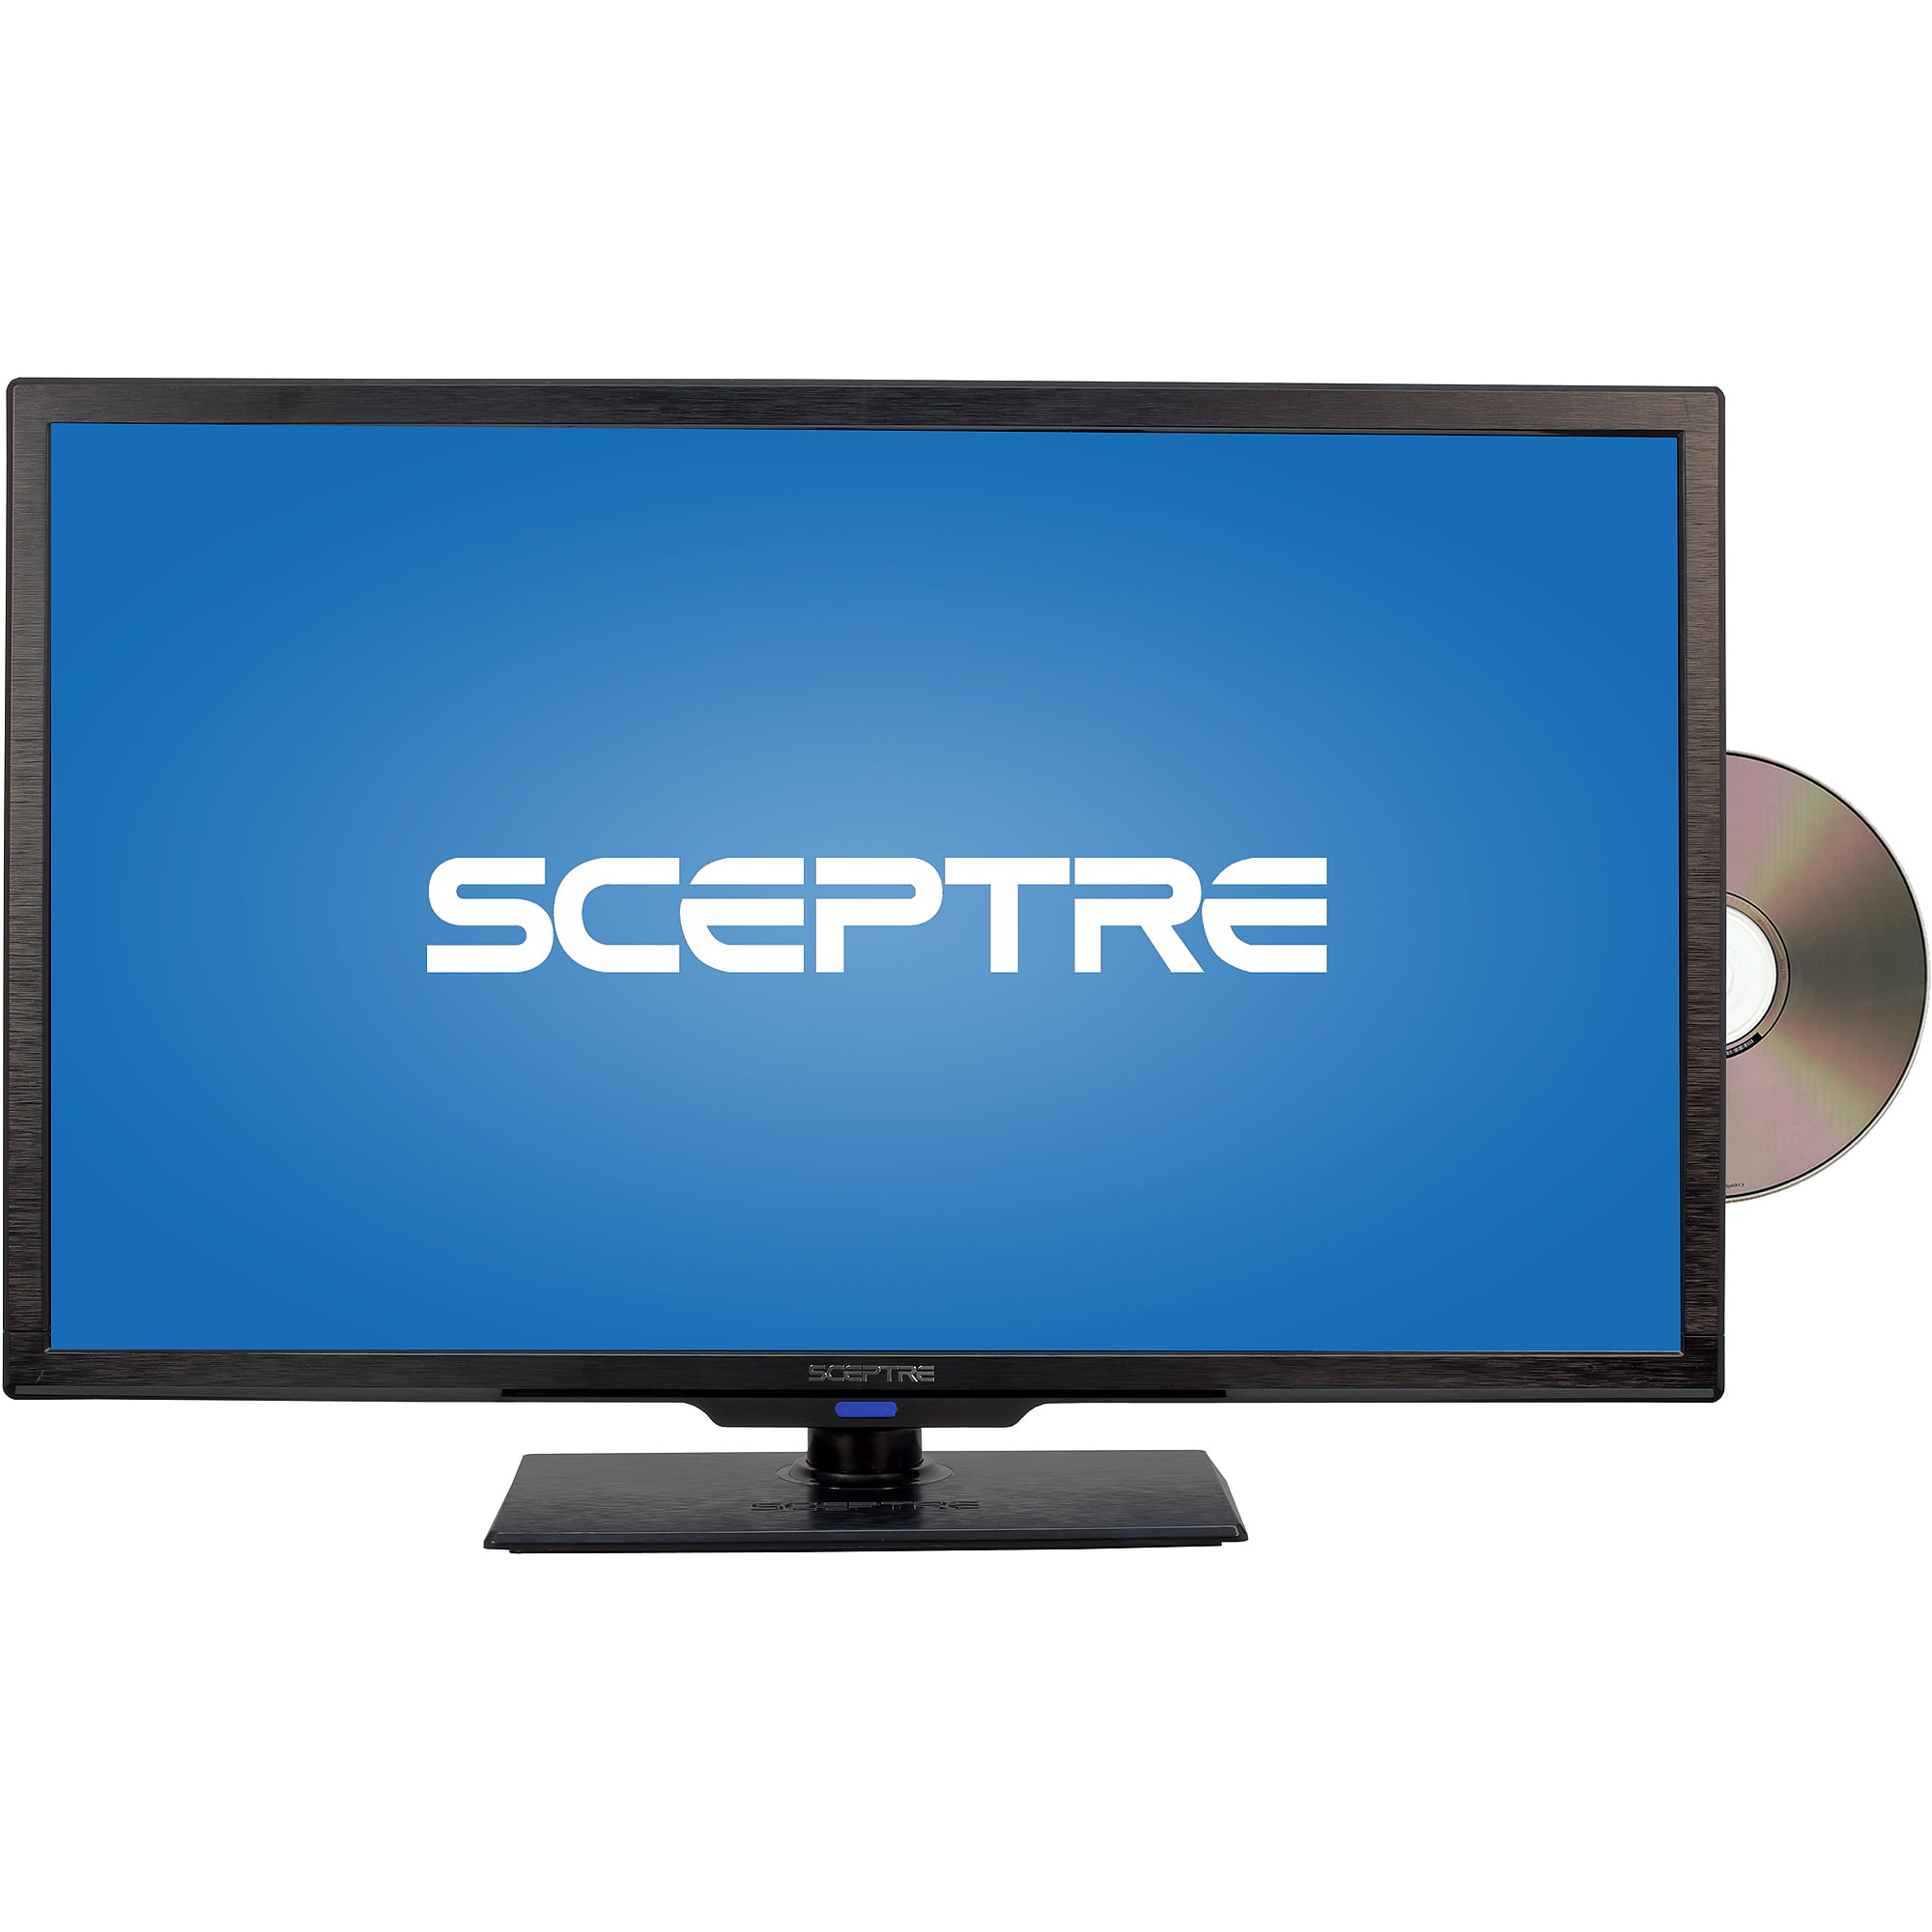 Sceptre E245bd F 24 60hz Led 1080p Hdtv With Built In Dvd Player Walmart Com Walmart Com